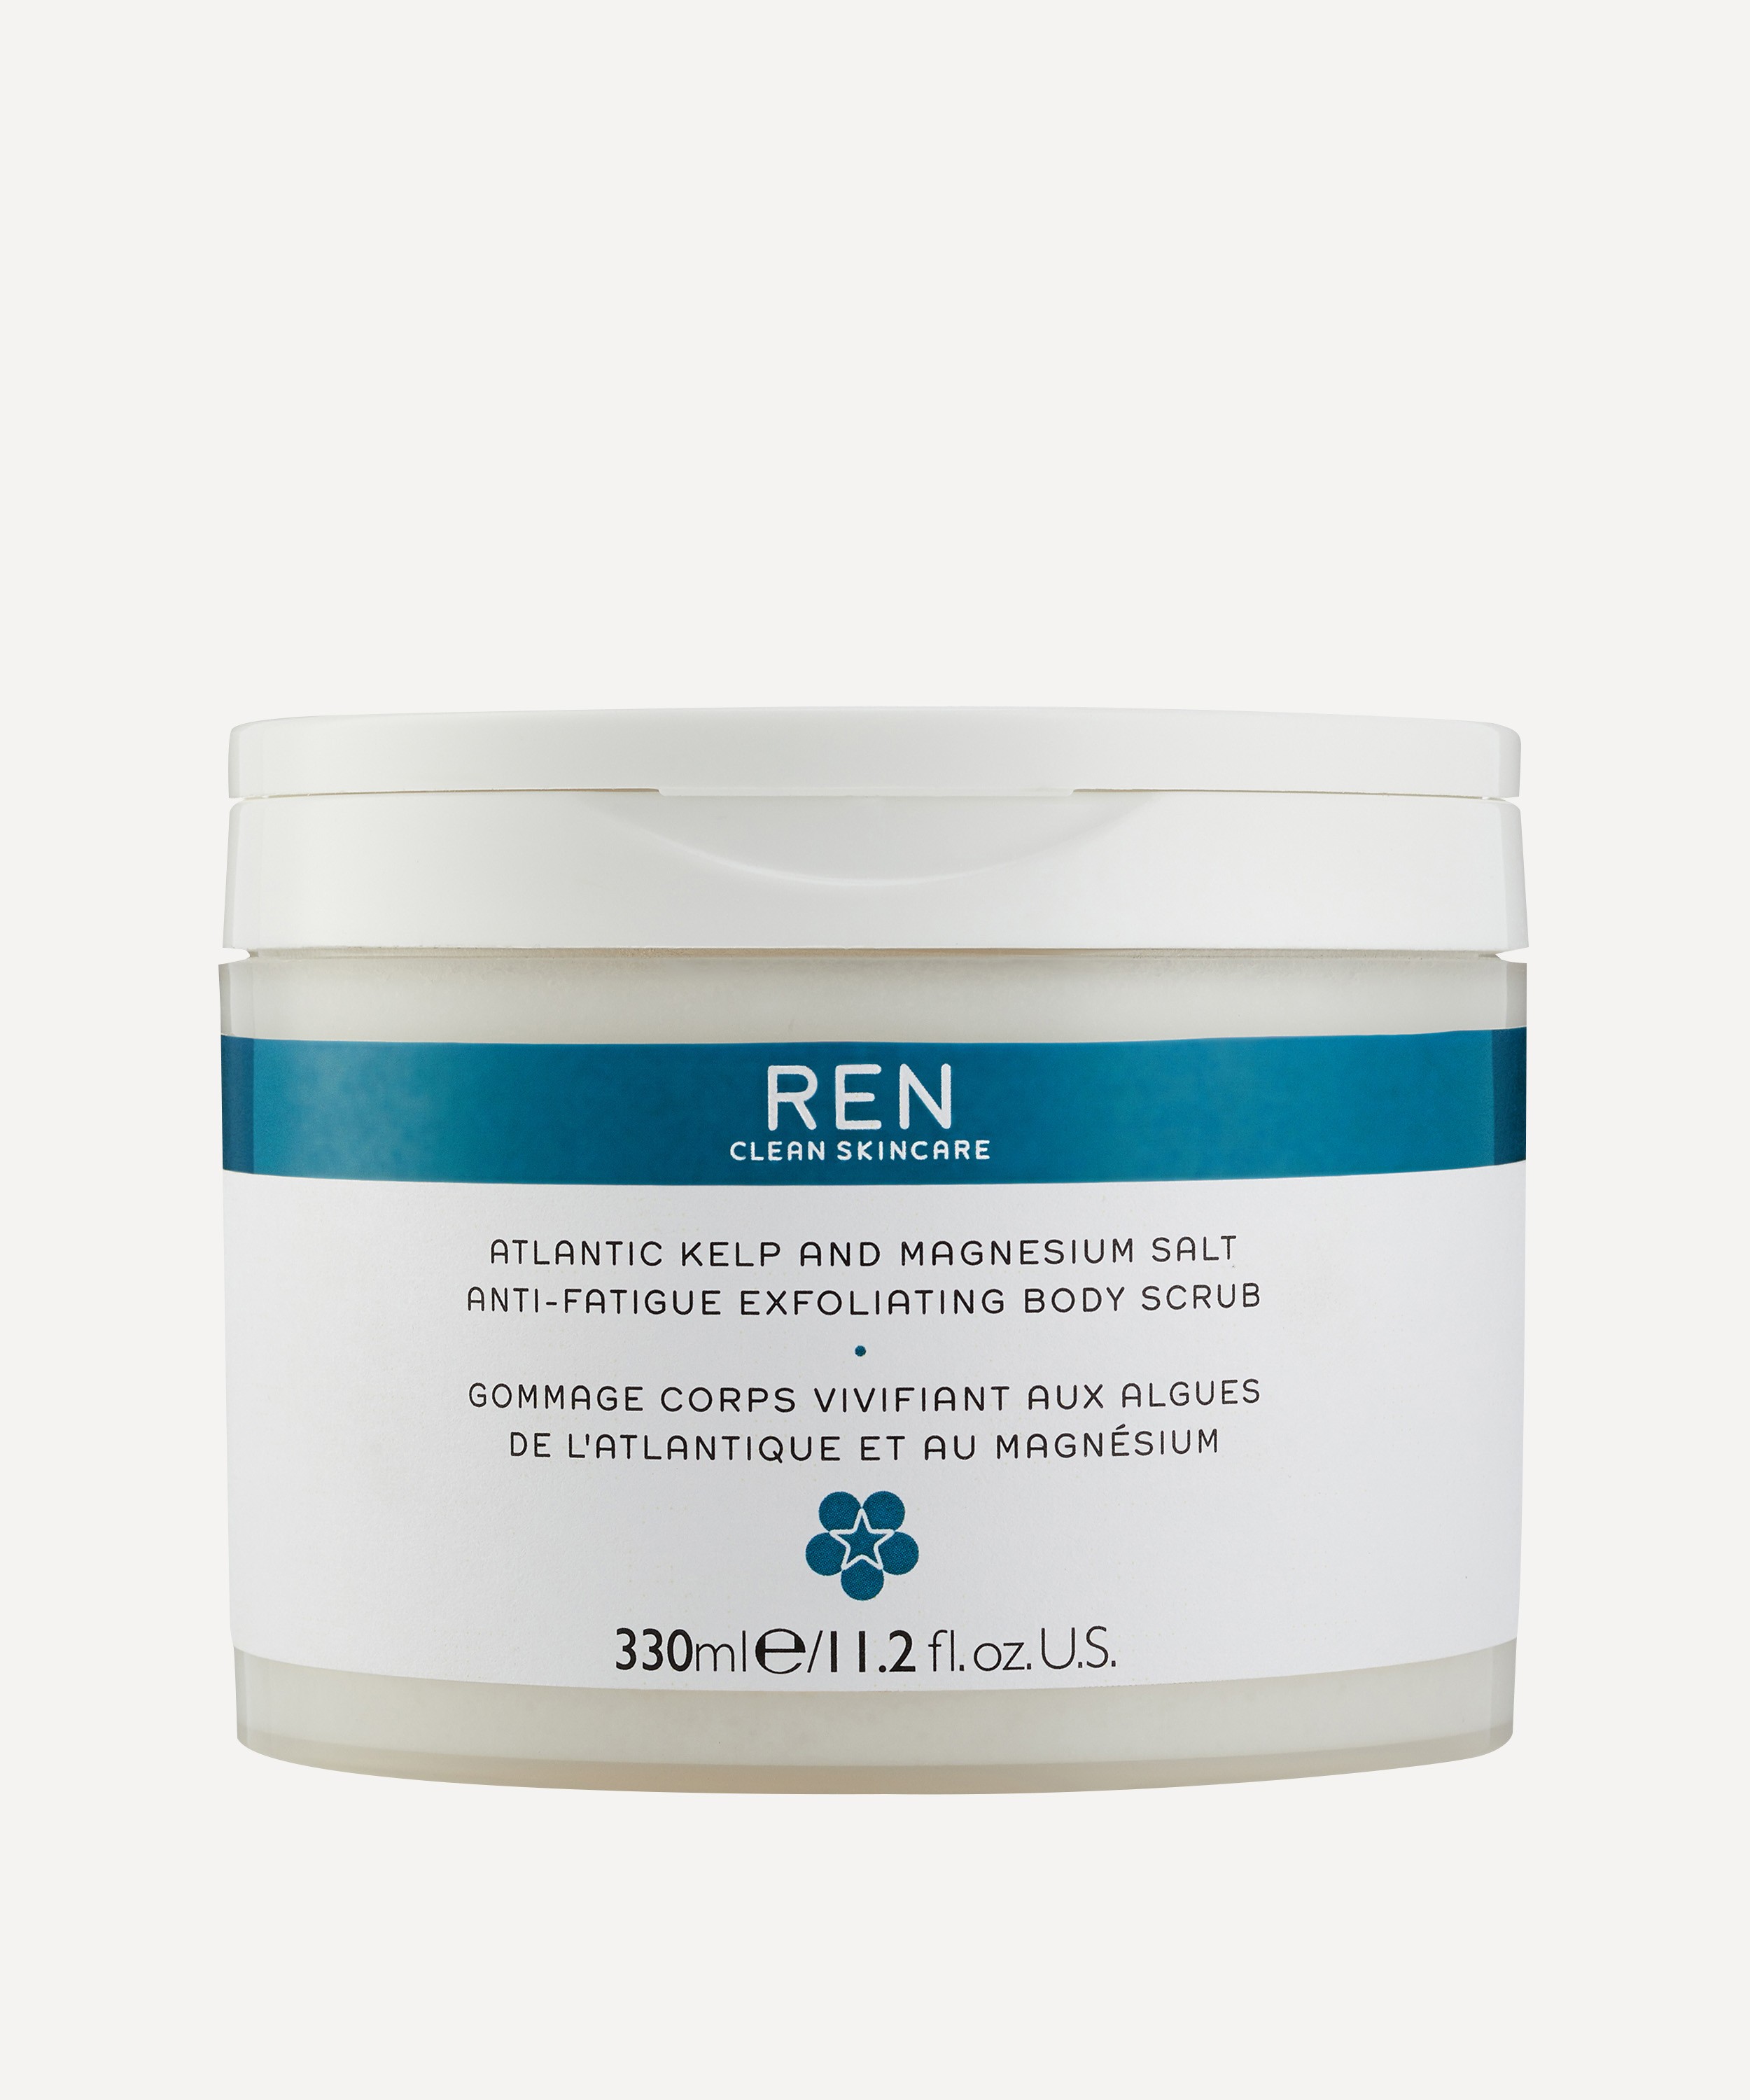 REN Clean Skincare - Atlantic Kelp and Magnesium Salt Anti-Fatigue Exfoliating Body Scrub 330ml